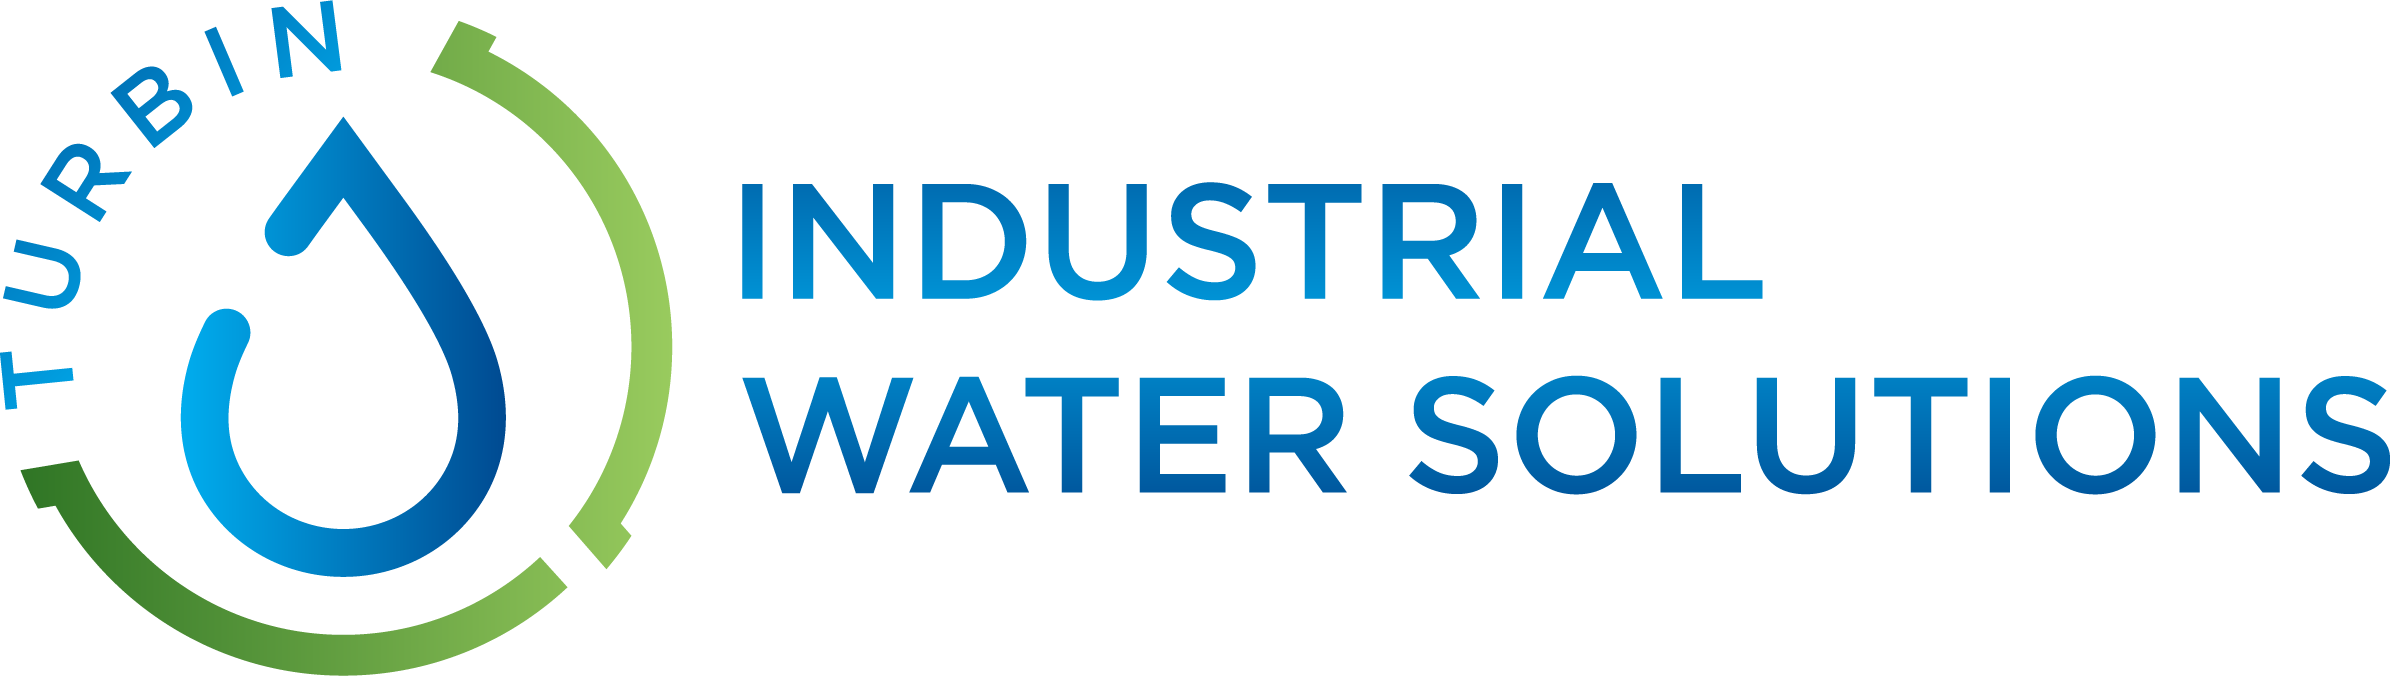 Turbin Industrial Water Solutions